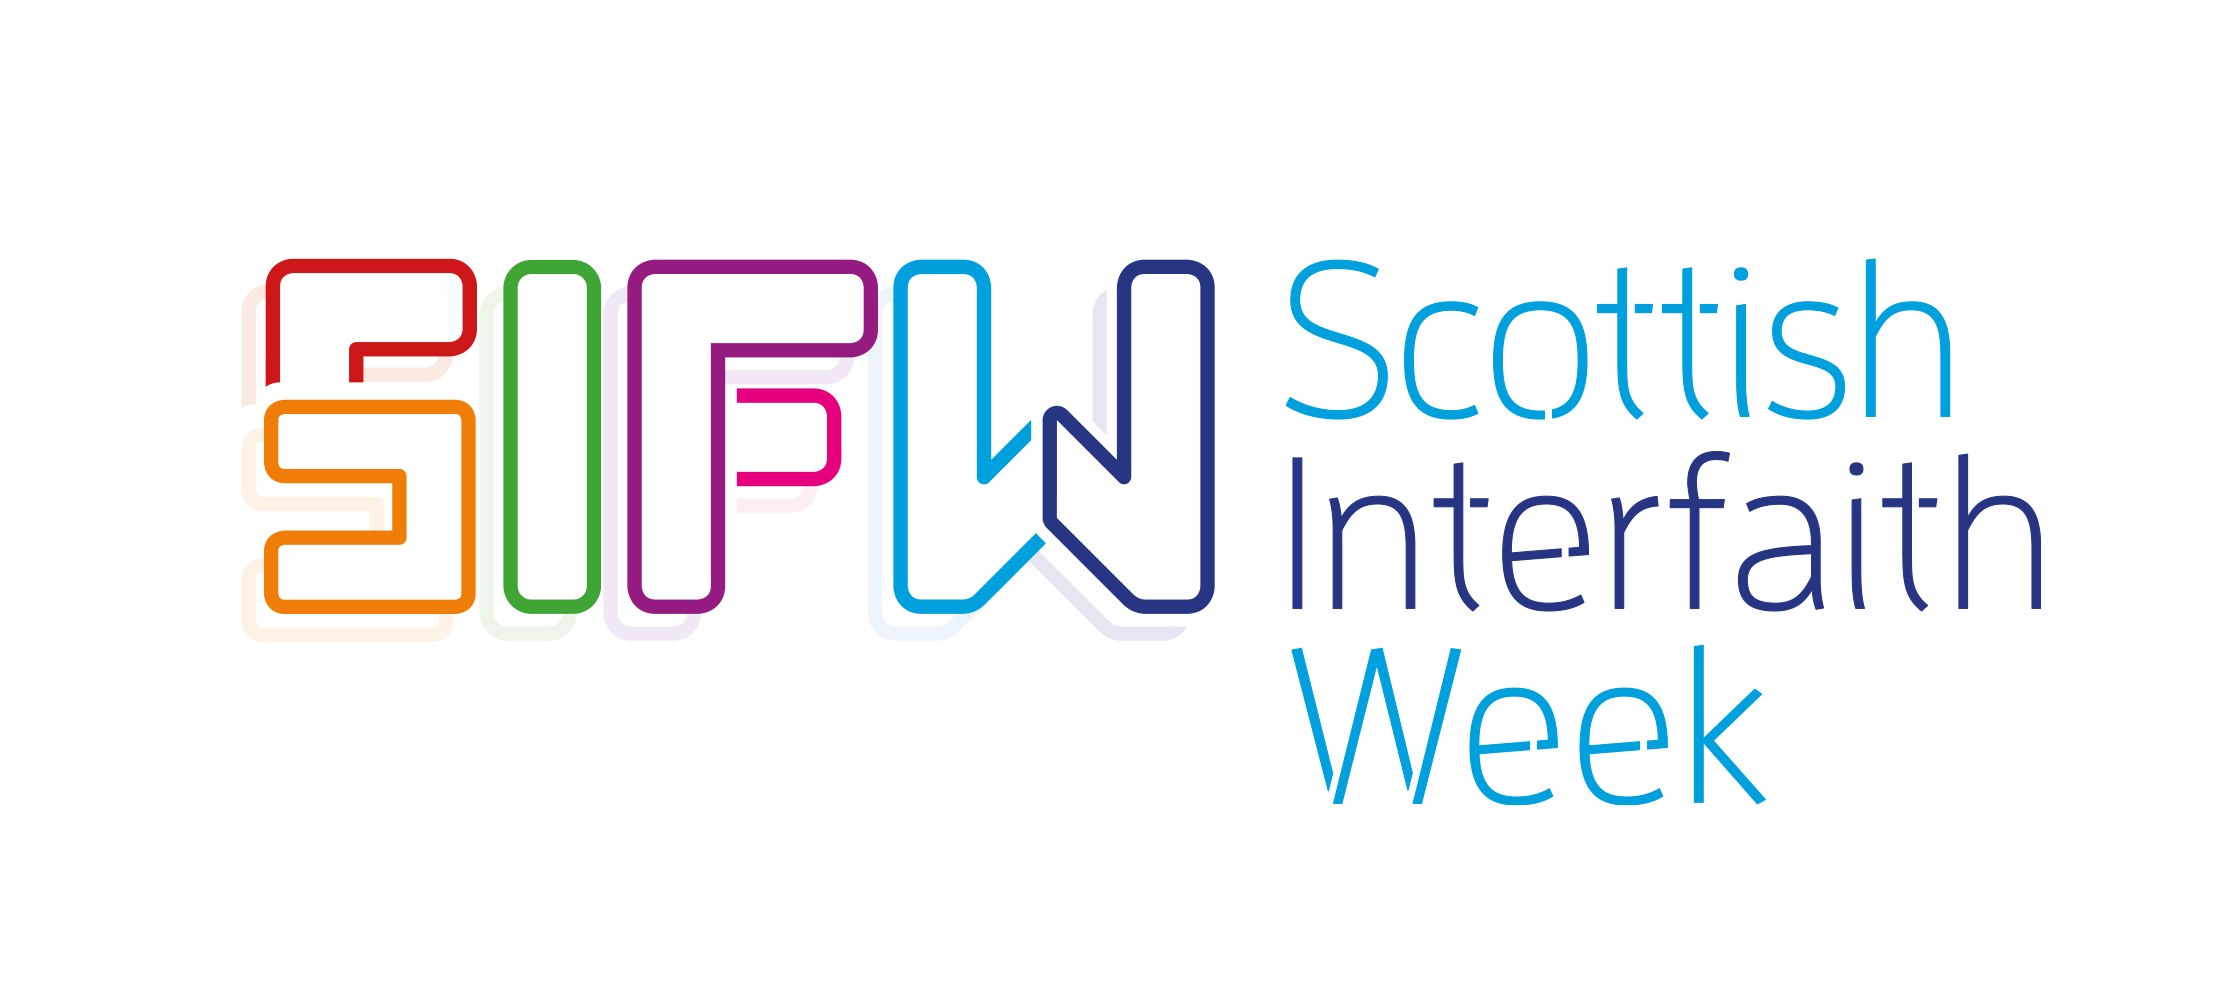 Scottish Interfaith Week